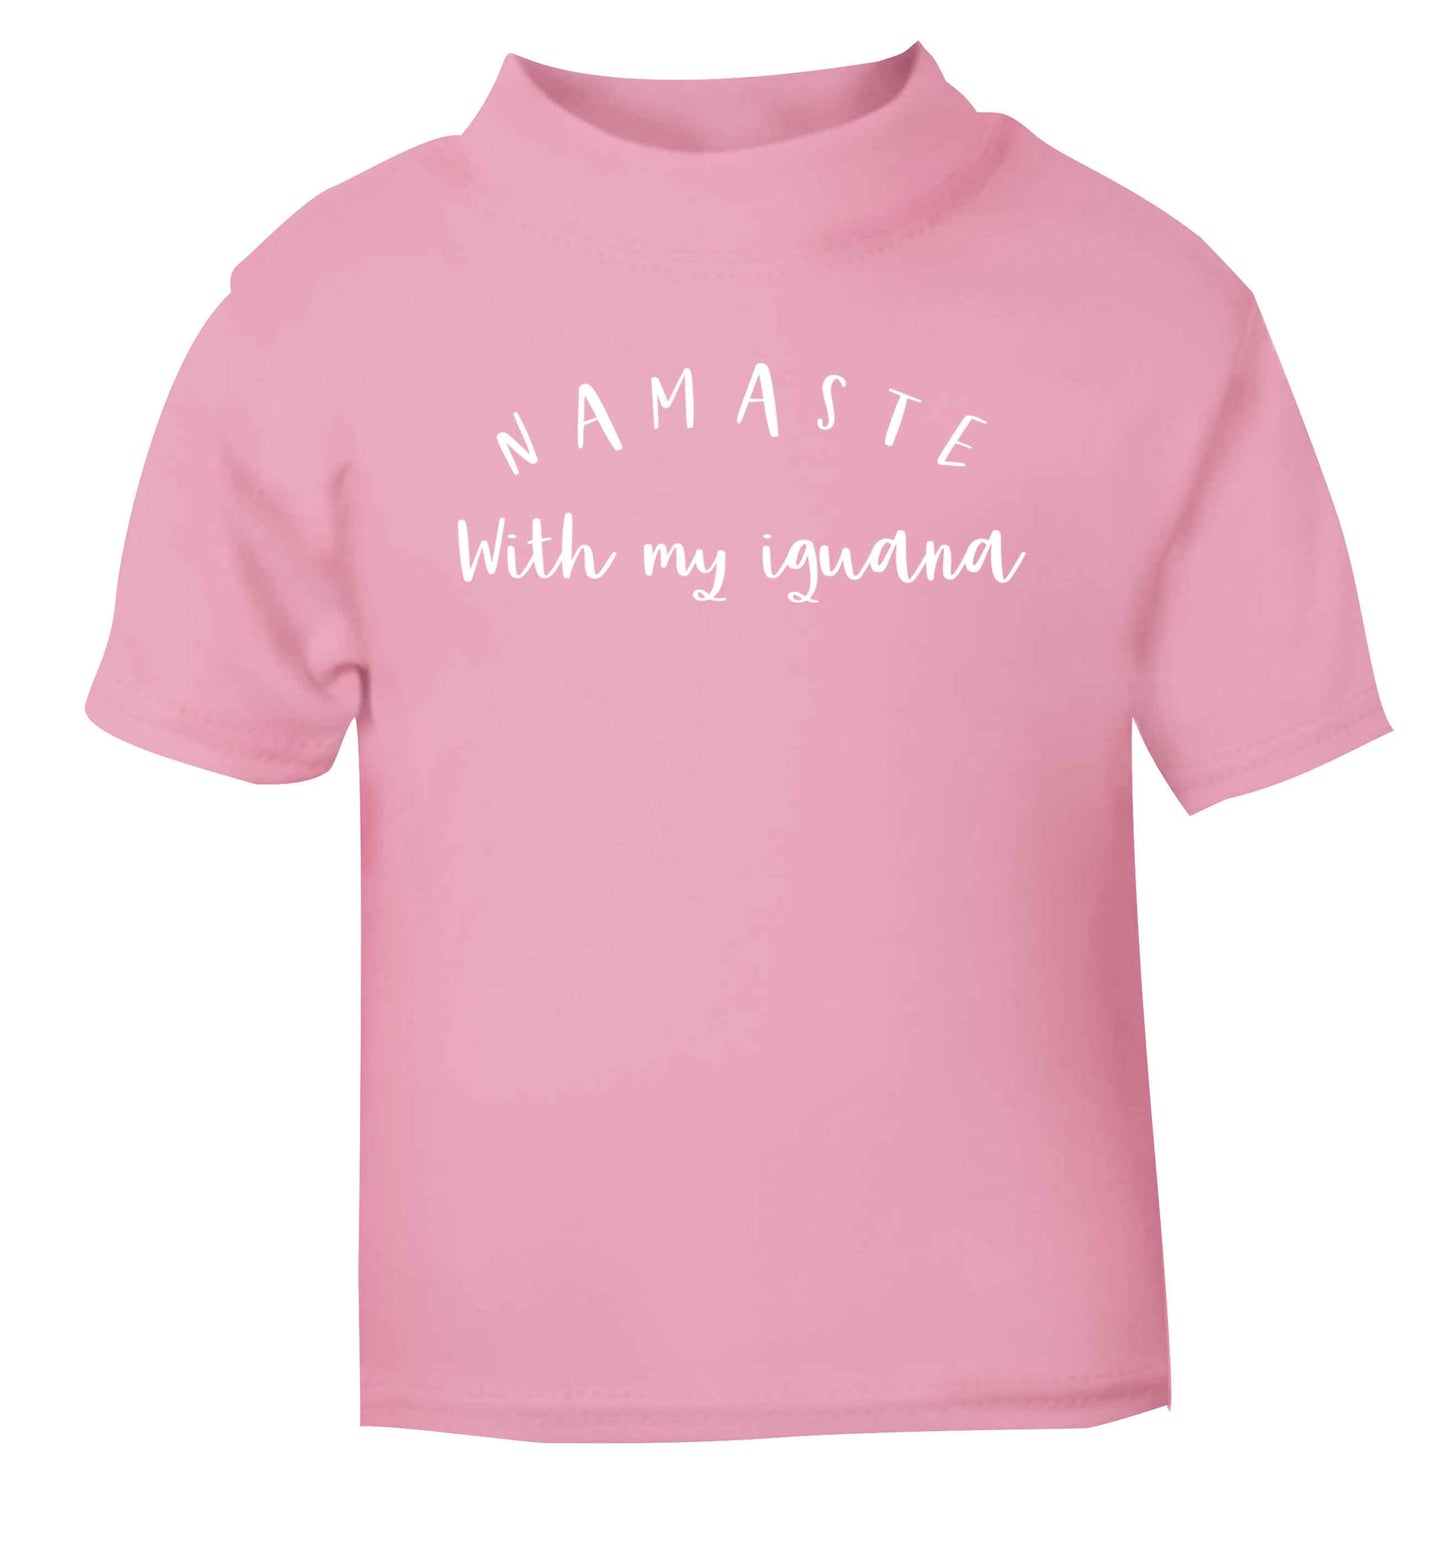 Namaste with my iguana light pink Baby Toddler Tshirt 2 Years